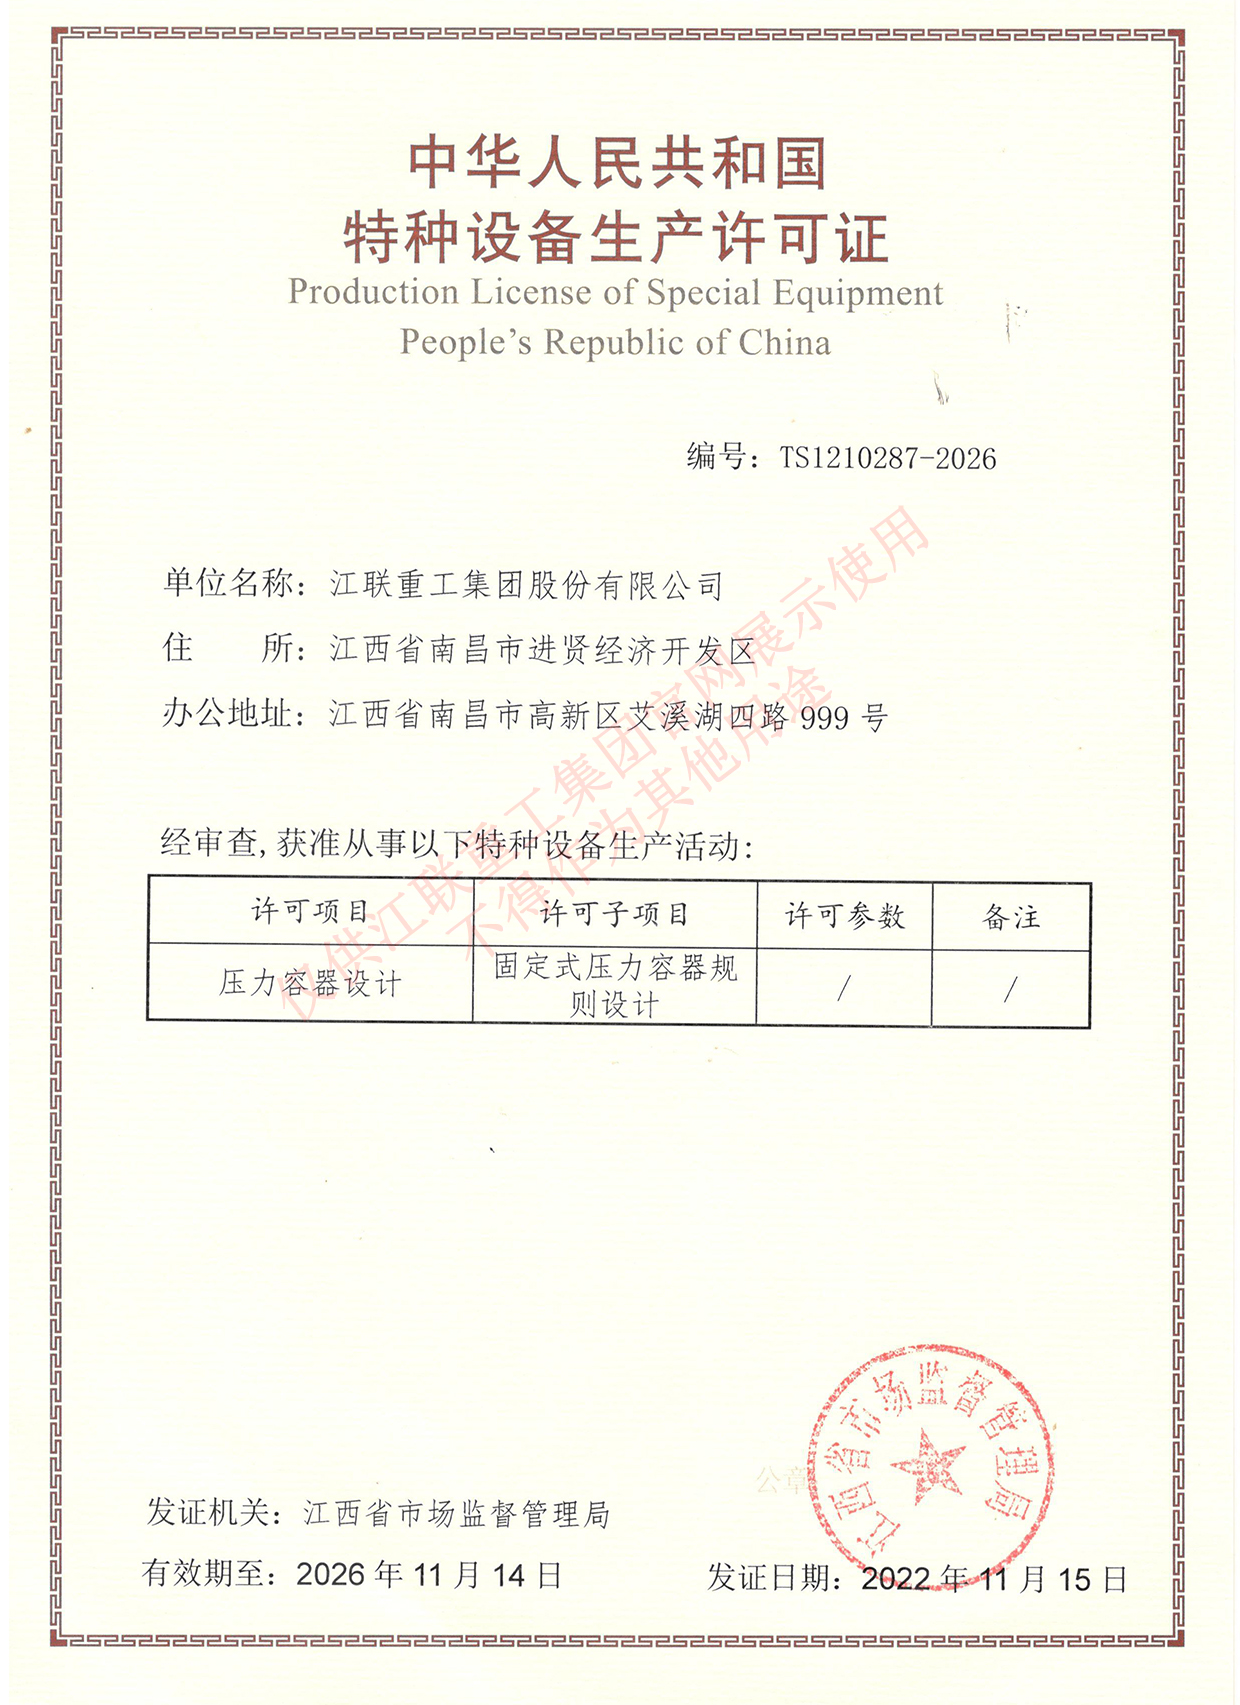 Design License of Pressure Vessels